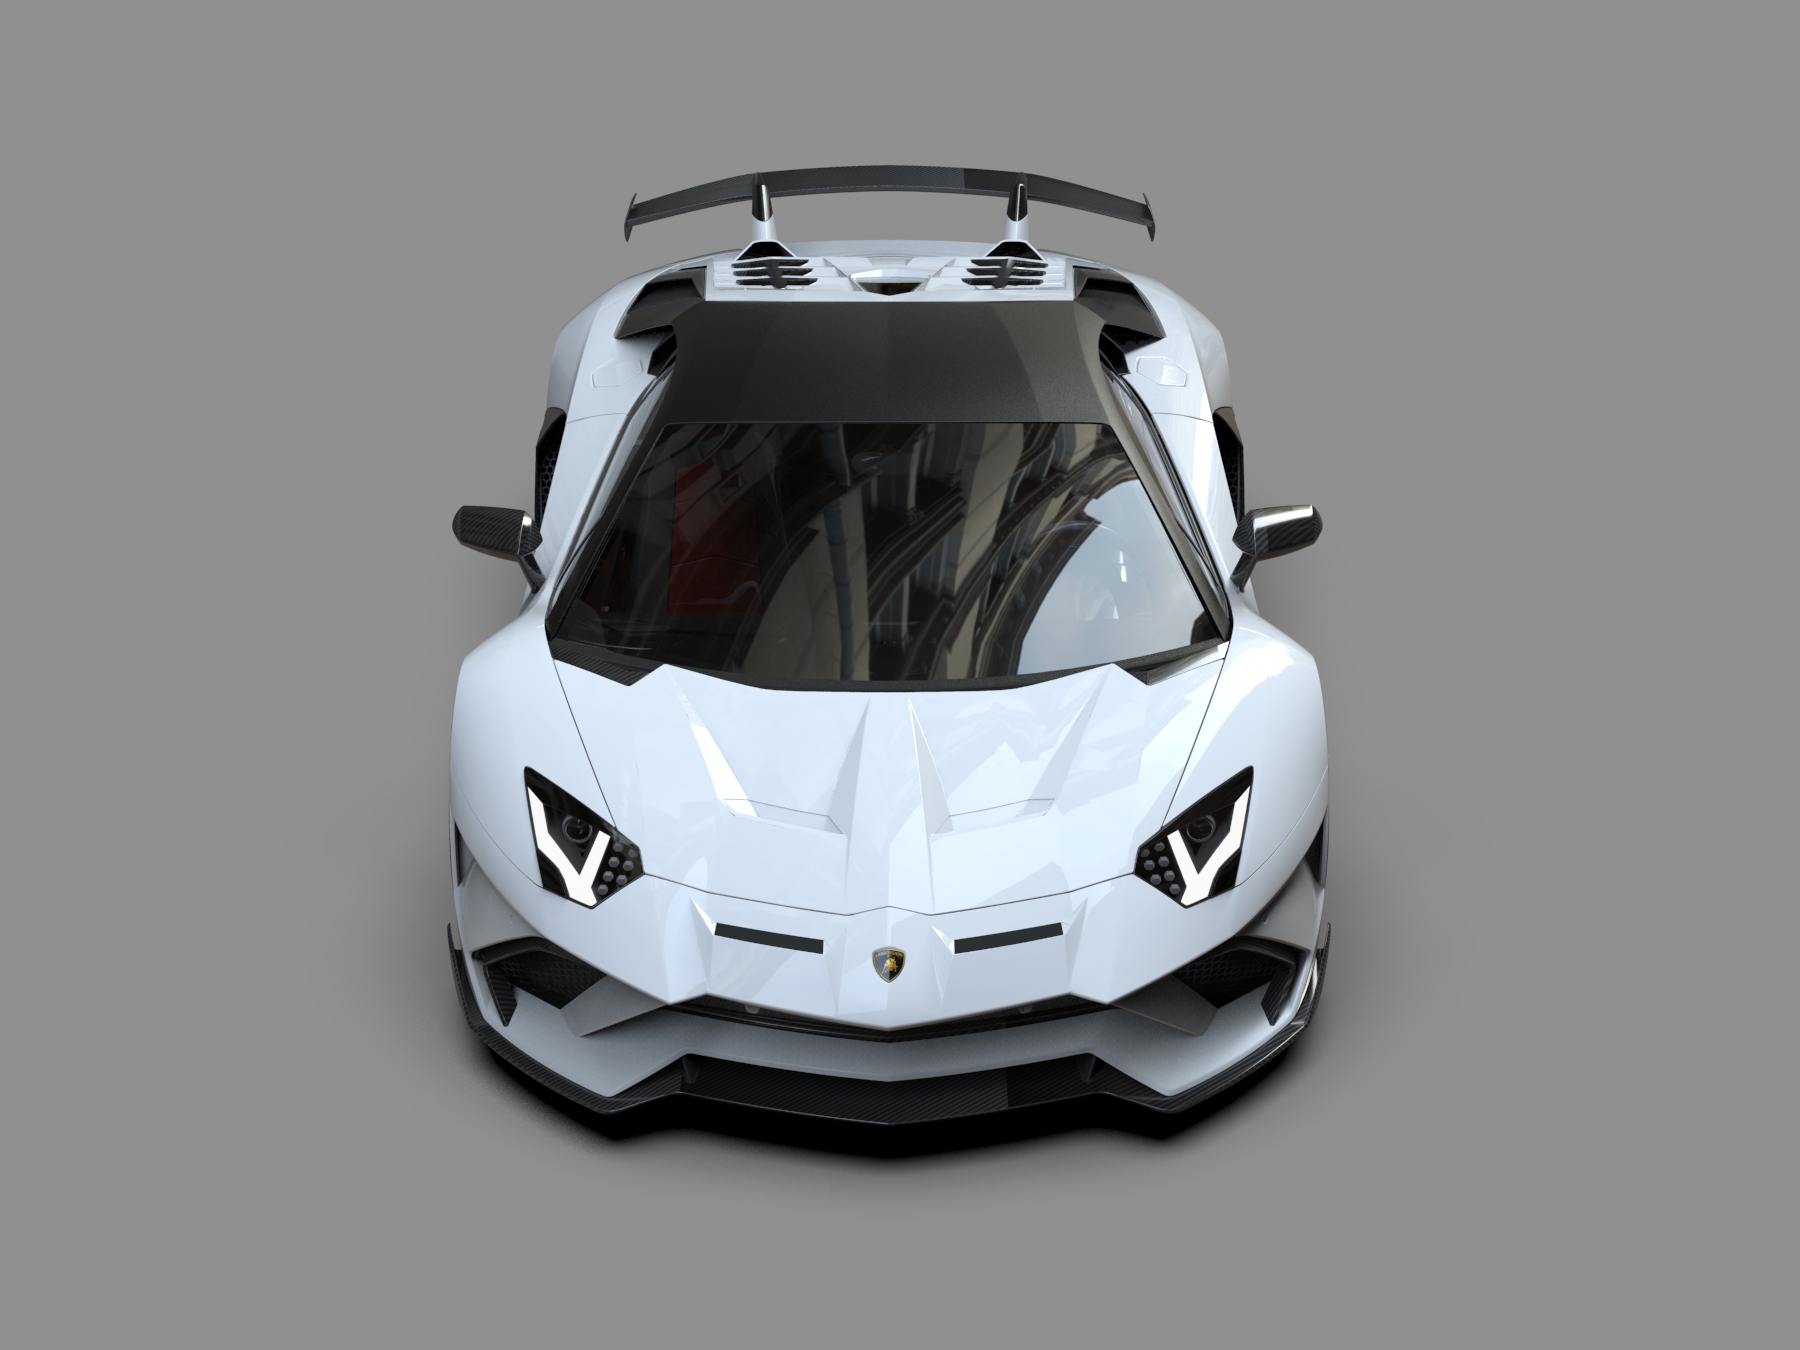 Check price and buy Duke Dynamics Body kit set for Lamborghini Aventador Widebody kit